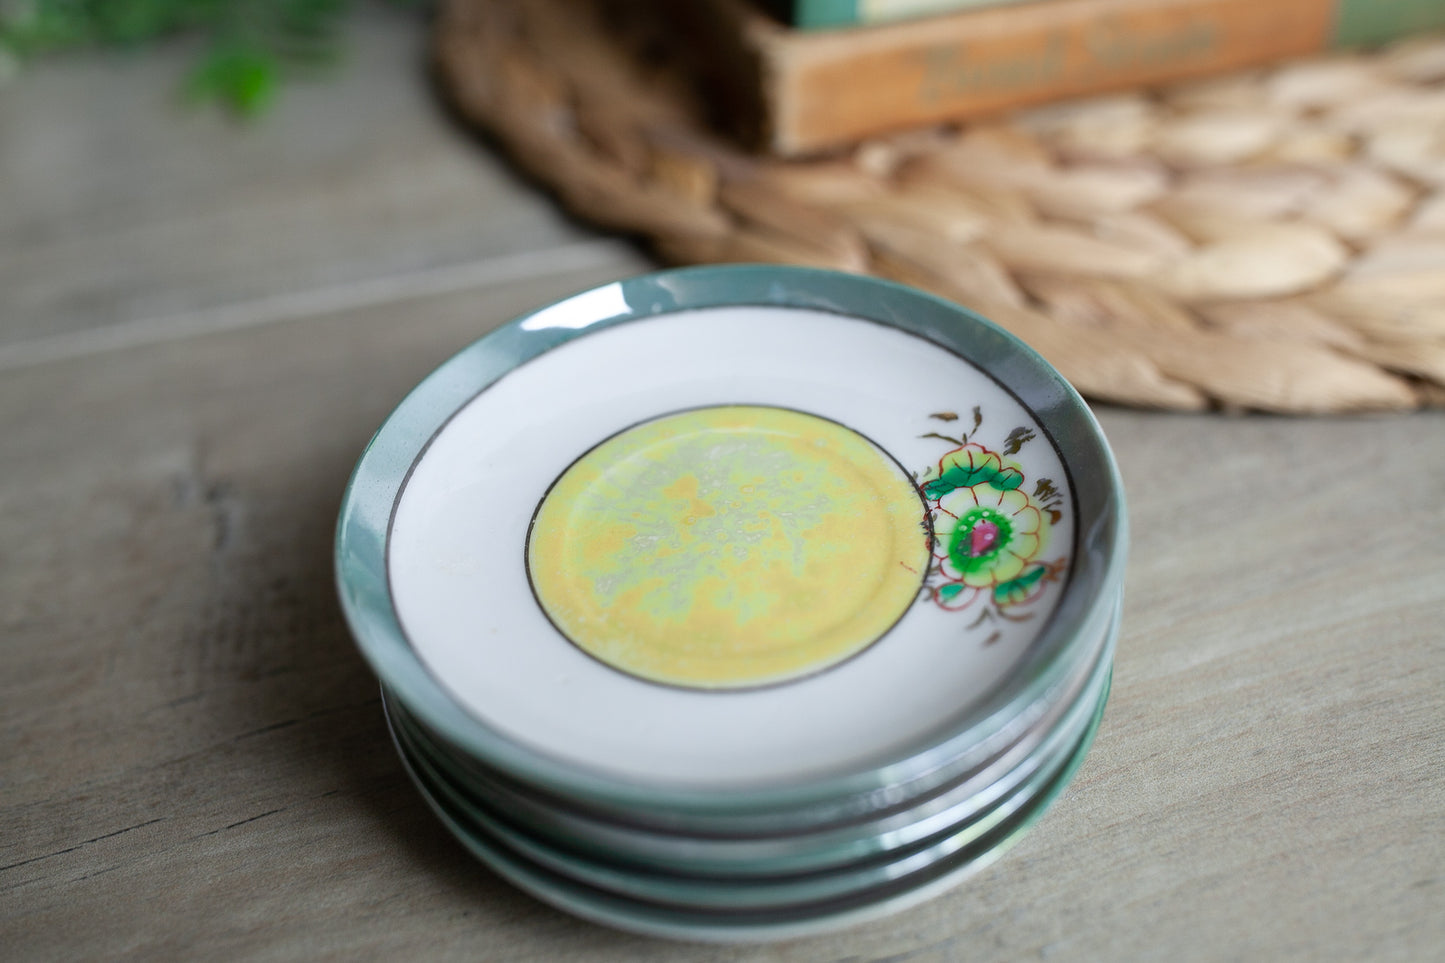 Vintage Butter Pats - Set of 6 Made in Japan -Floral